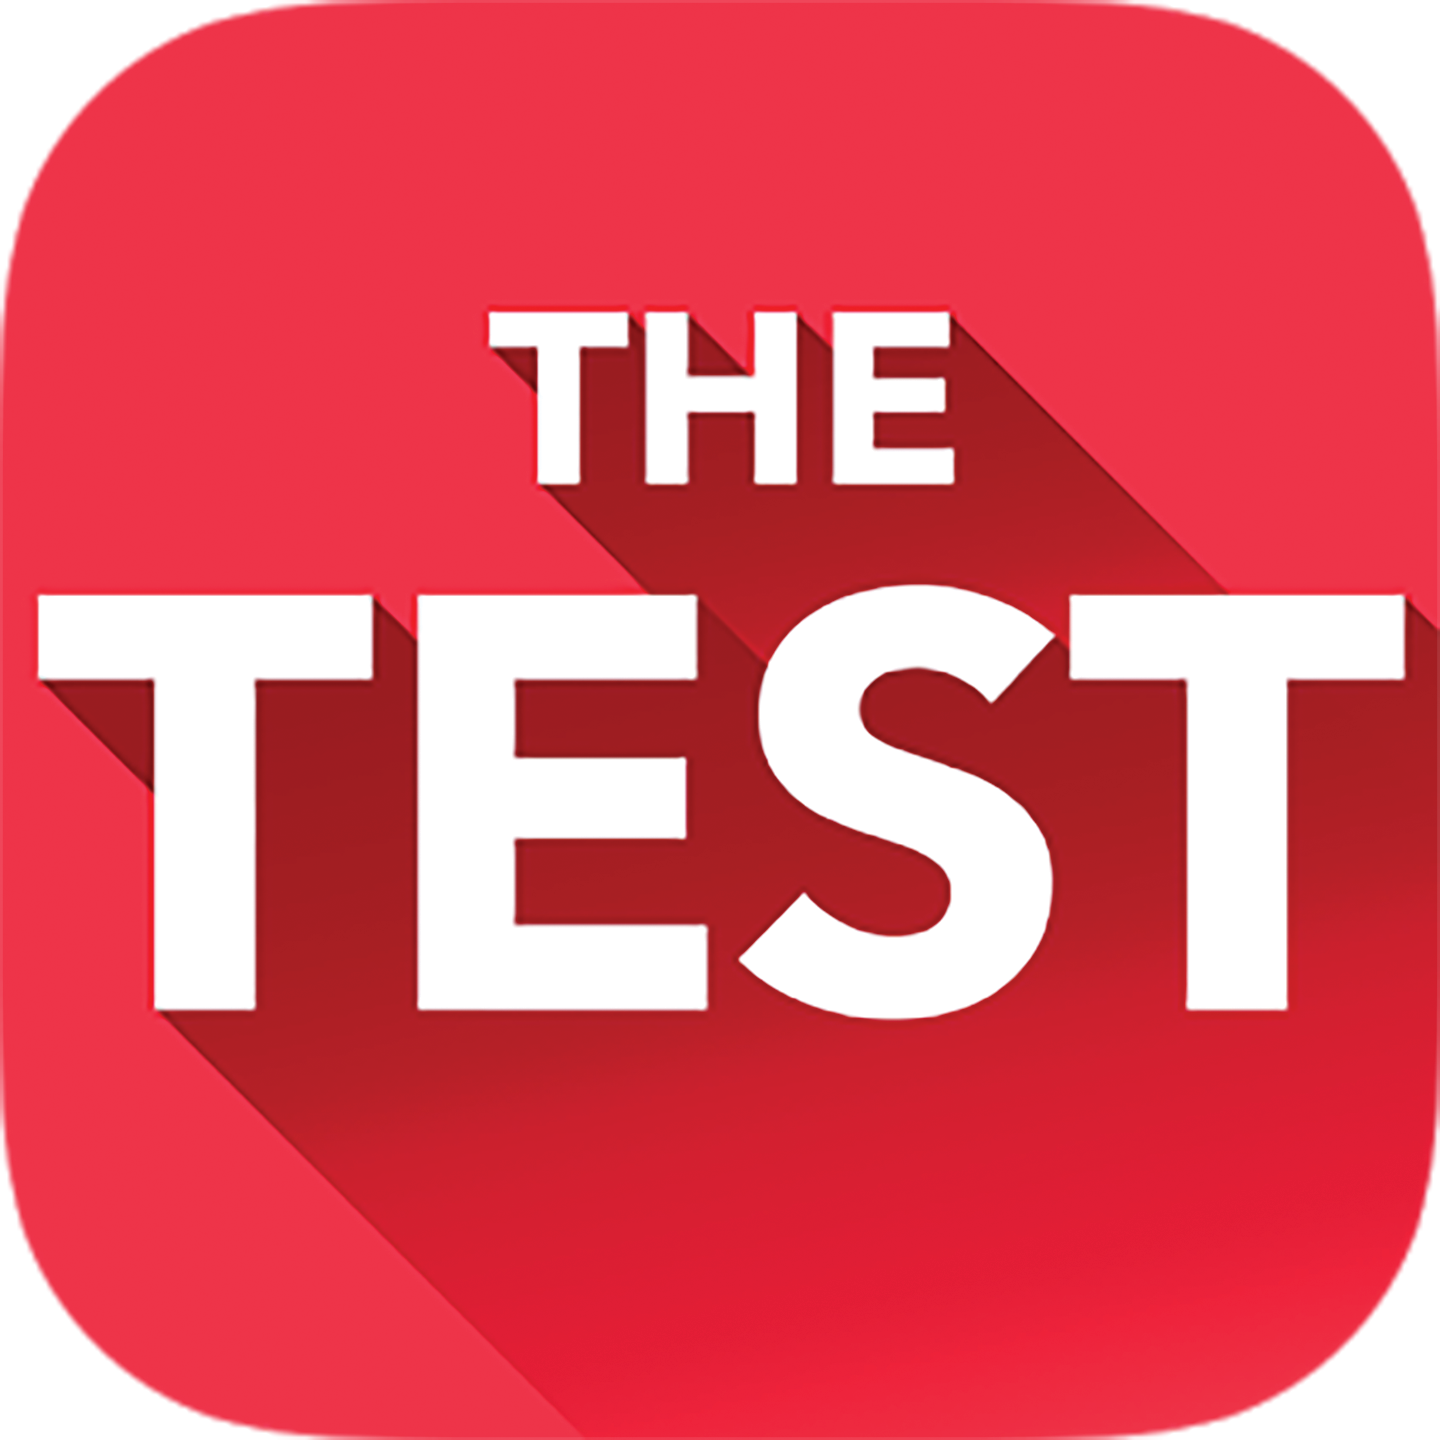 Who are you tests. Логотип Test. Тестирование надпись. Тест картинка. Тест надпись.